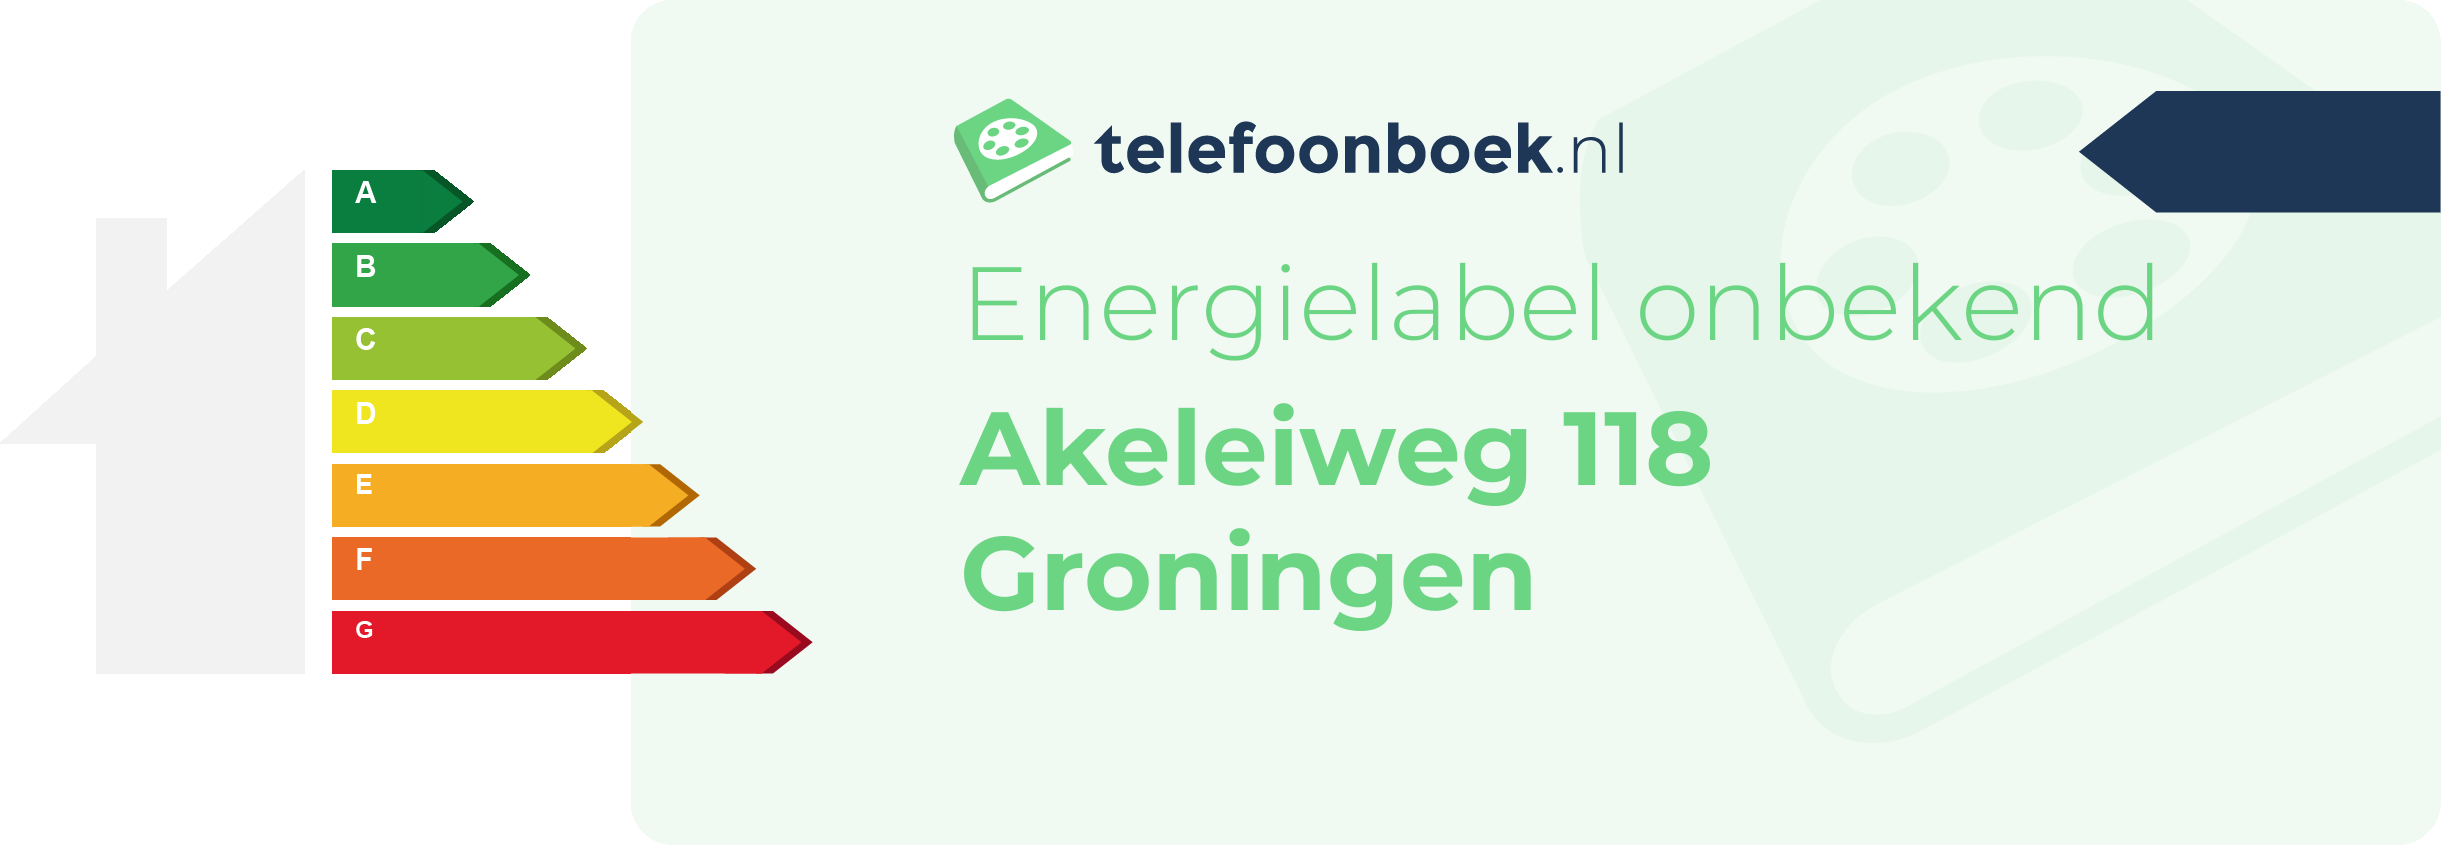 Energielabel Akeleiweg 118 Groningen